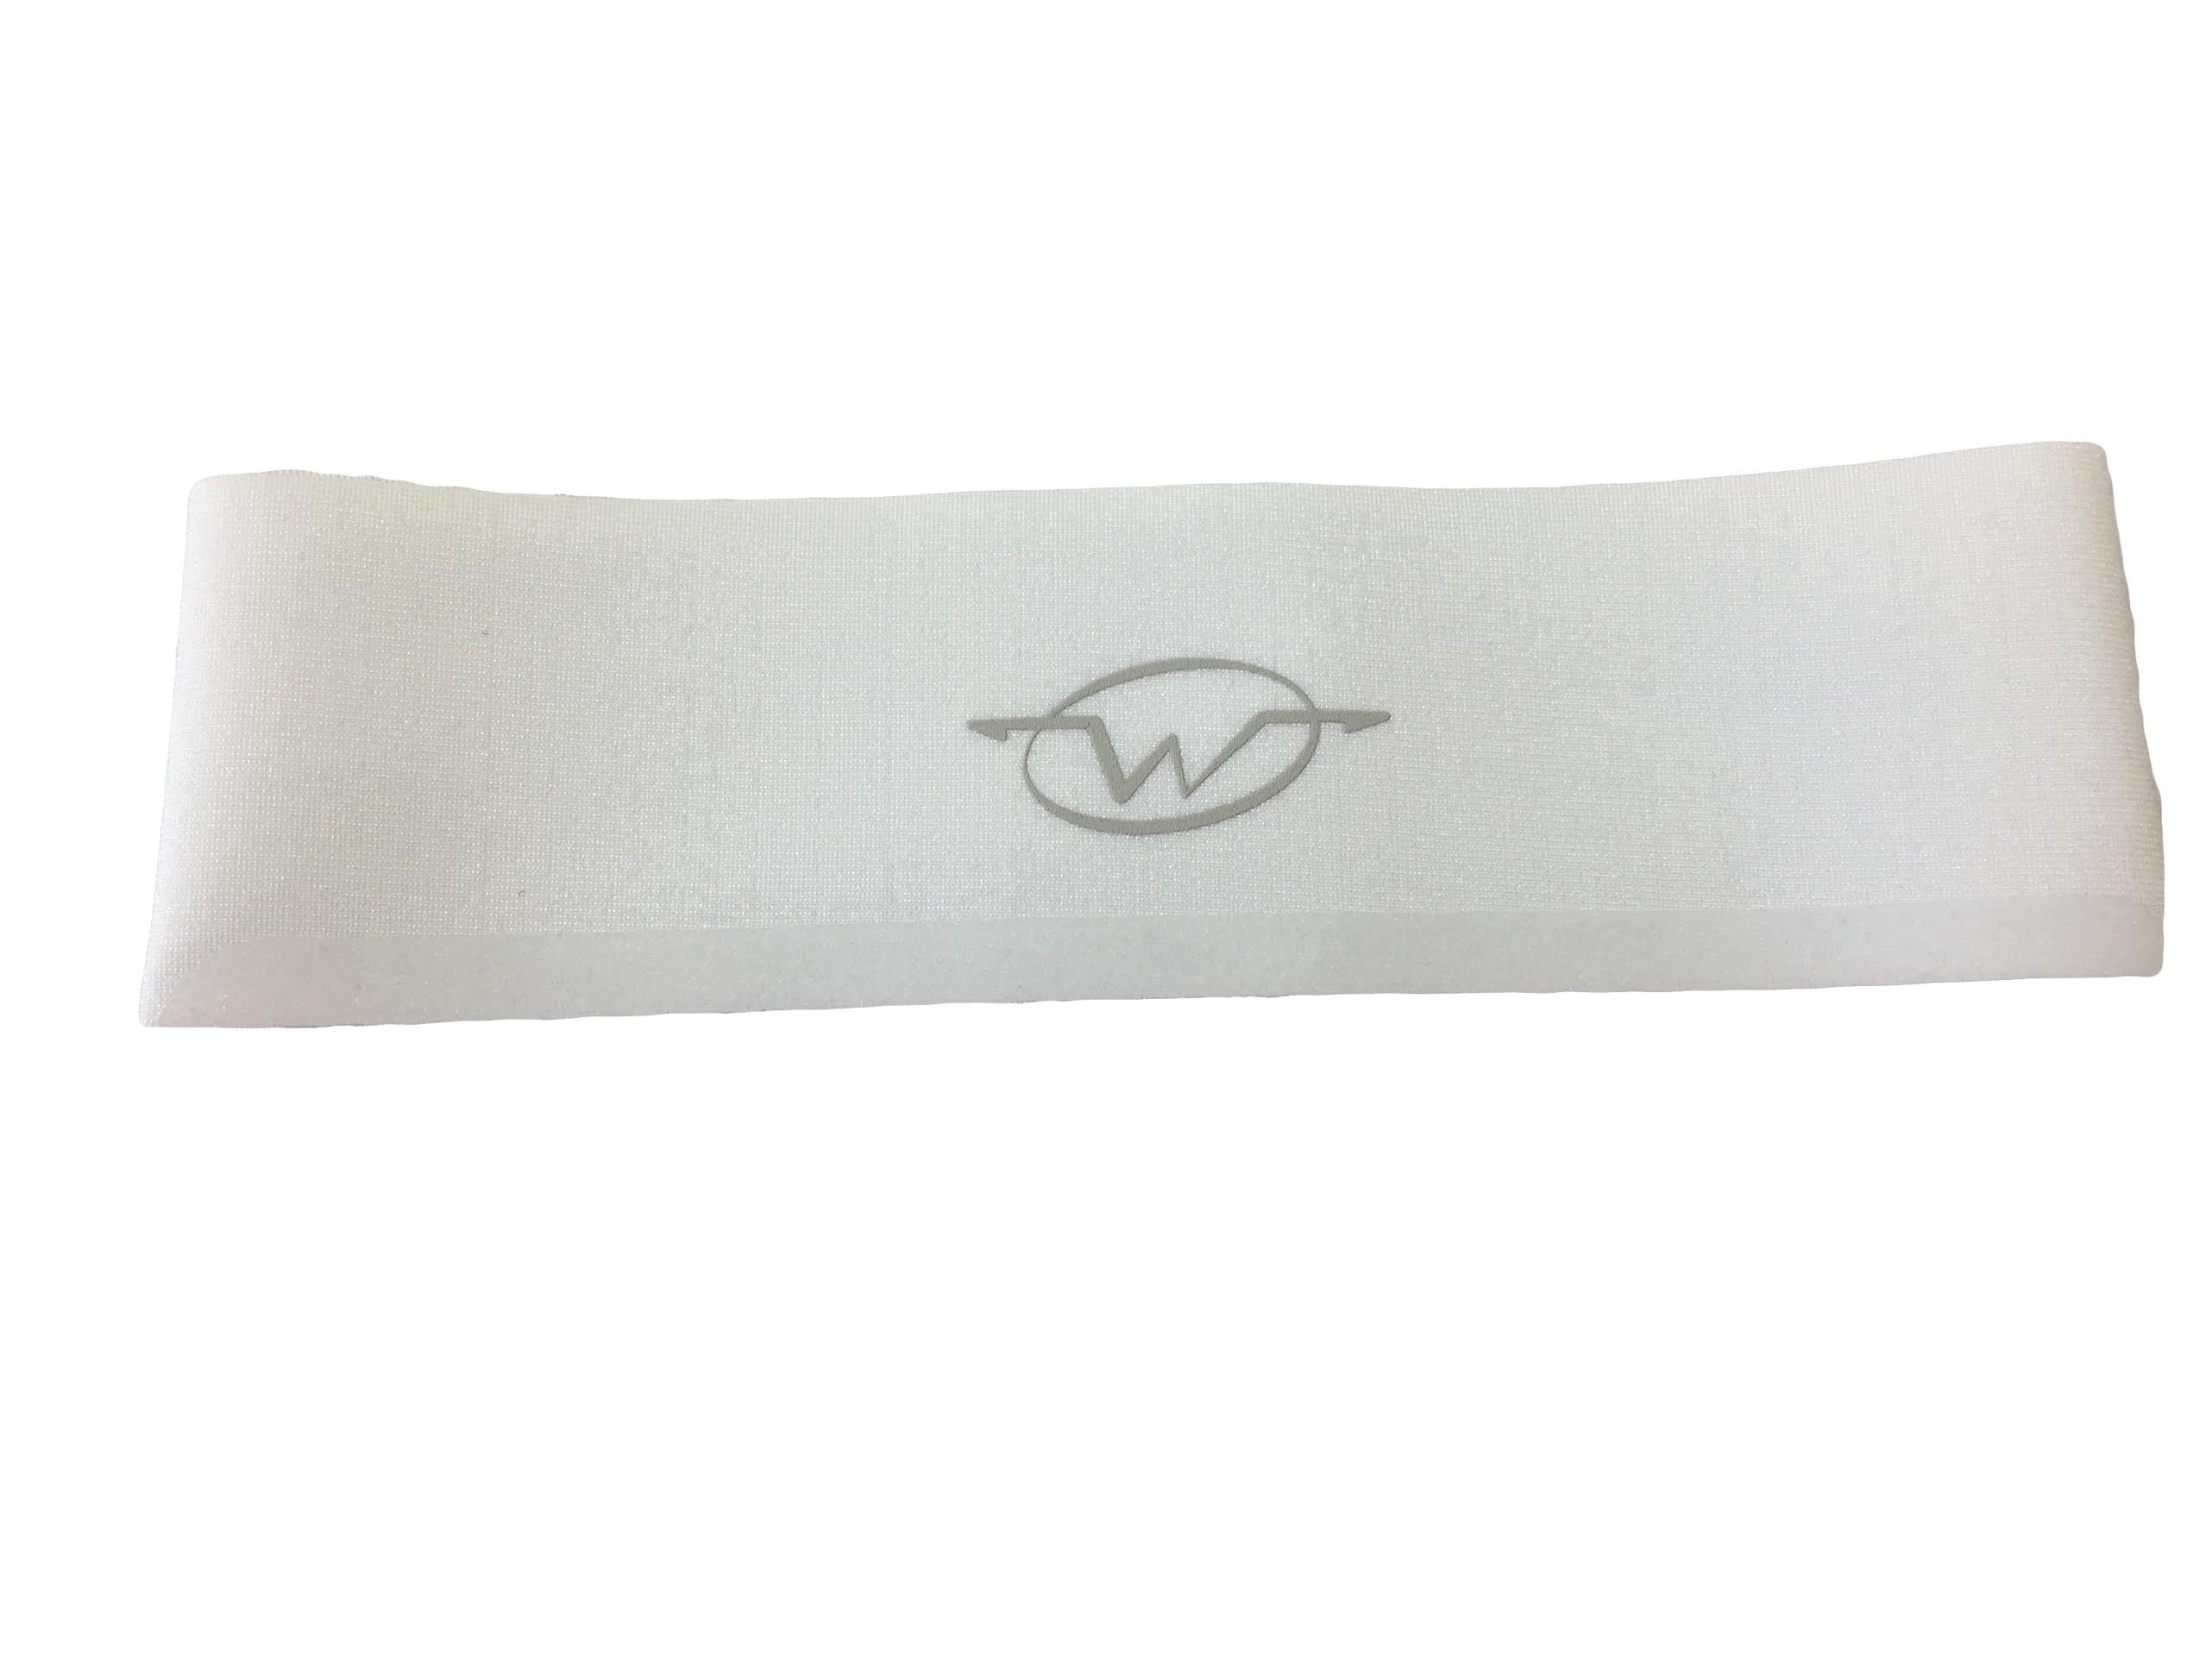 White performance headband by Wickflow